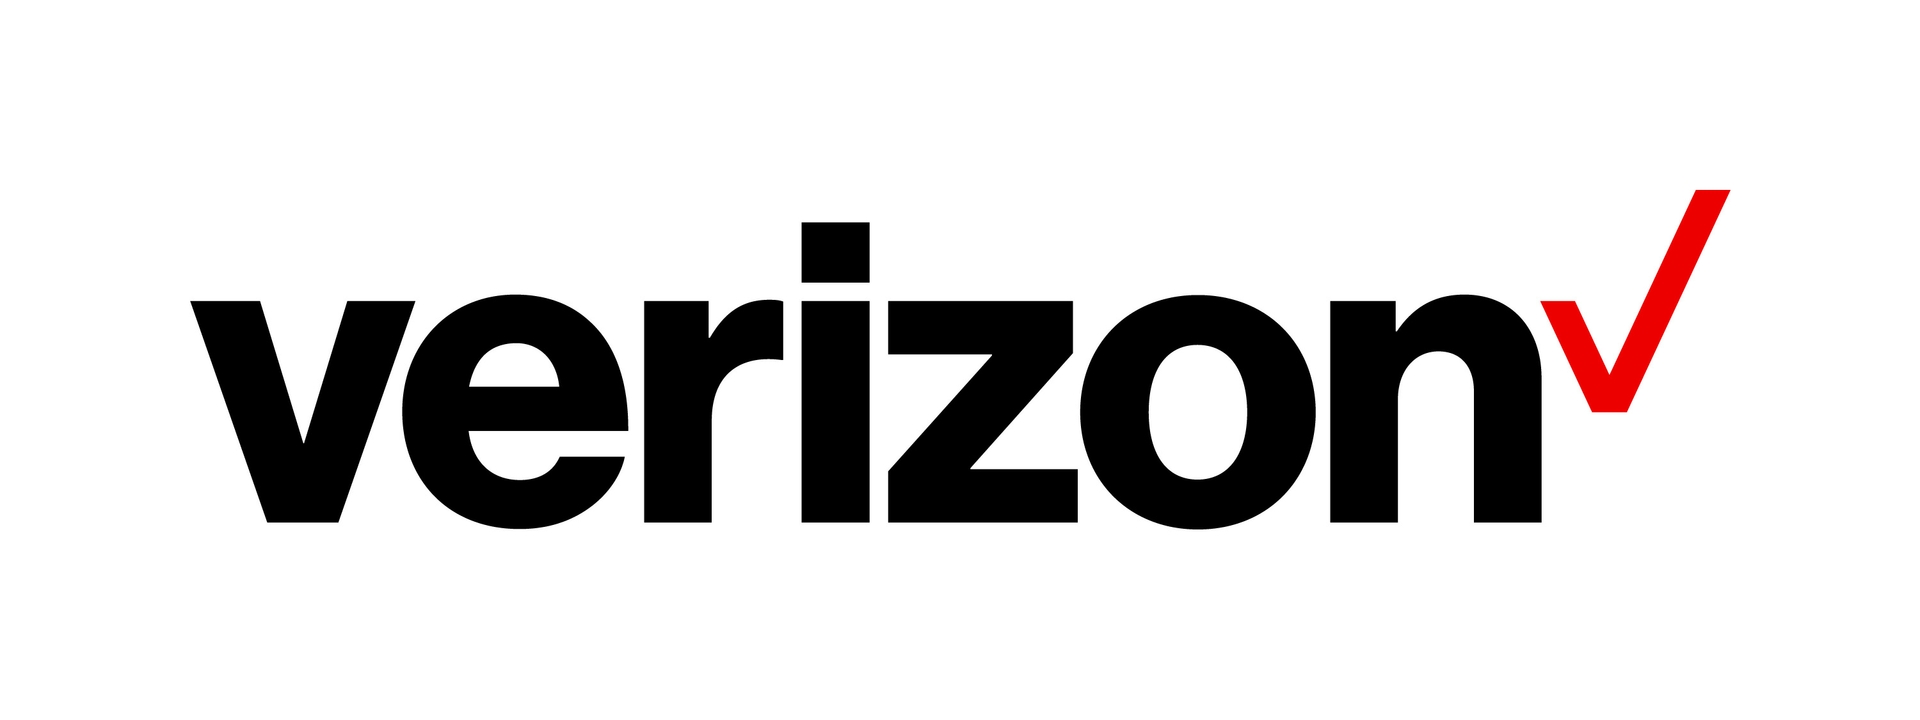 Verizon Wireless US